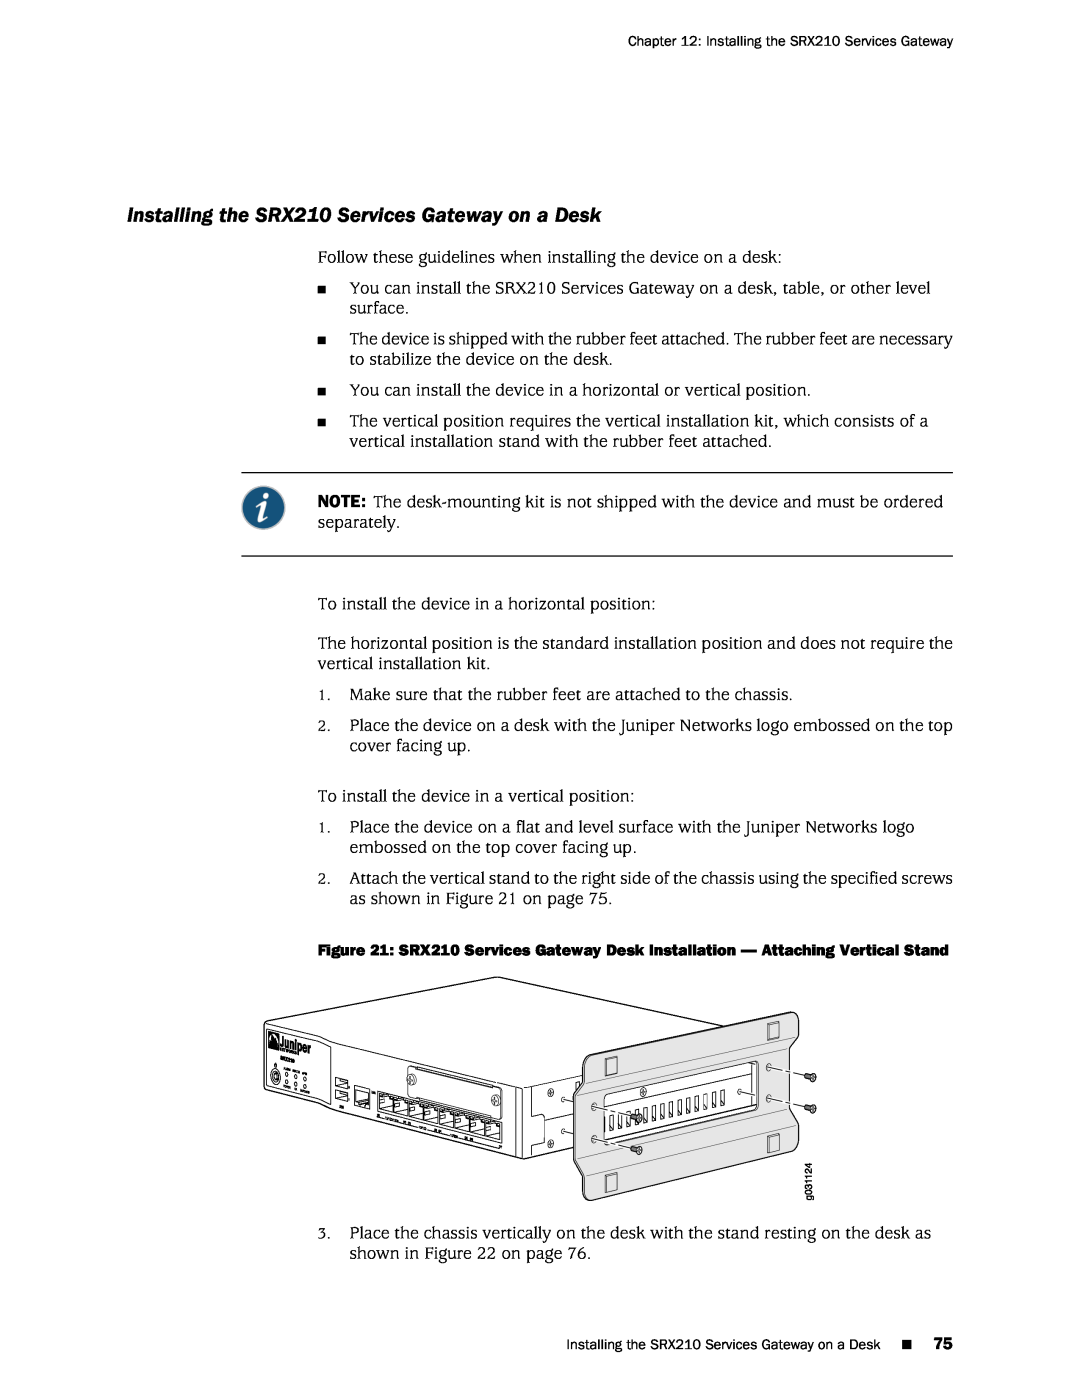 Juniper Networks SRX 210 manual Installing the SRX210 Services Gateway on a Desk 